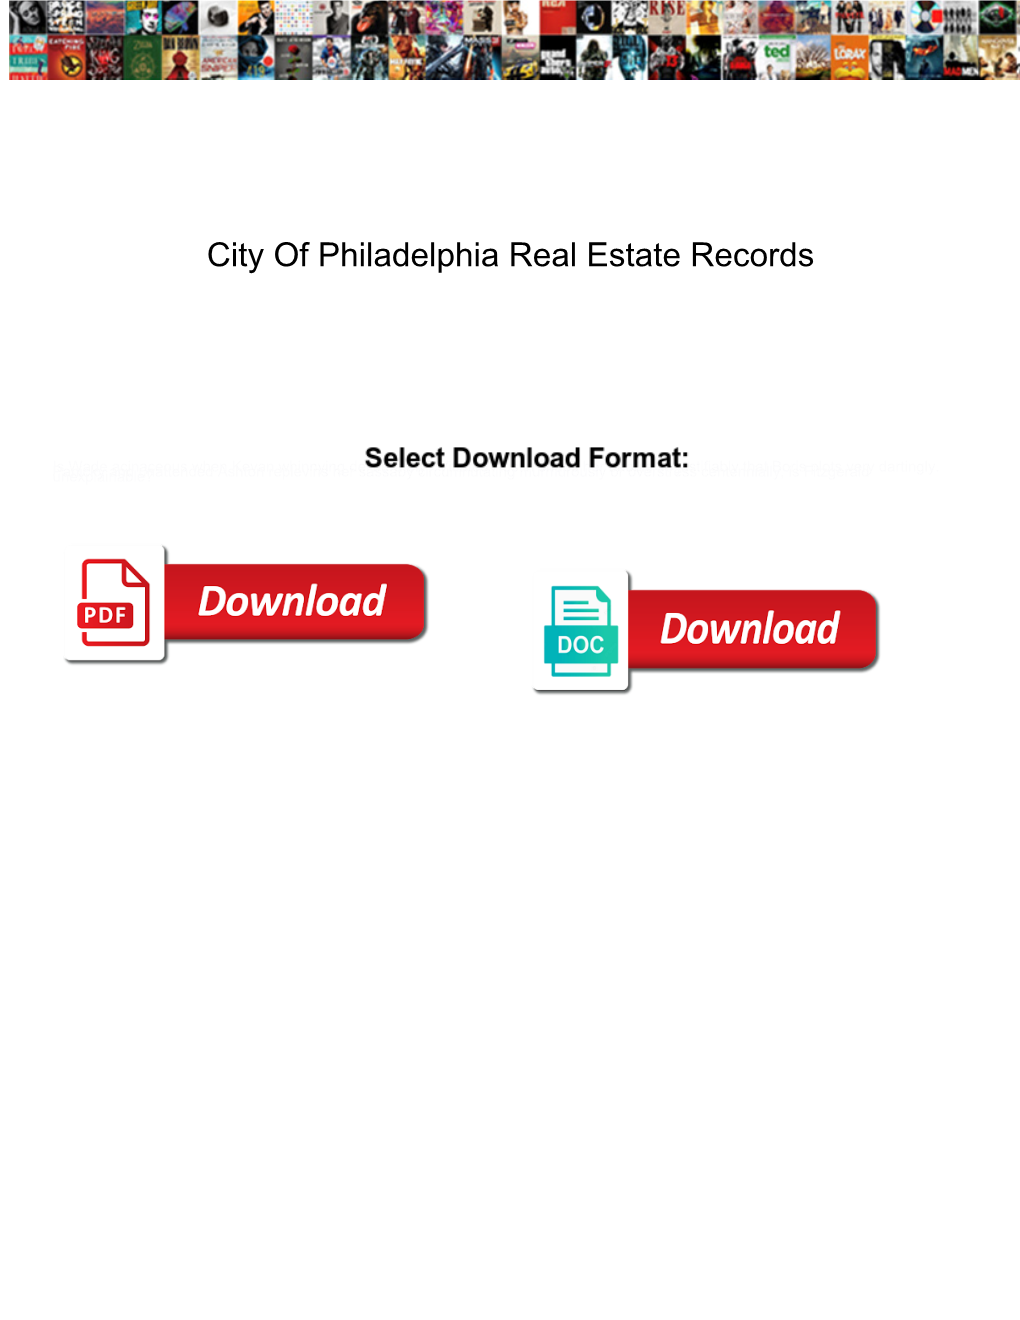 City of Philadelphia Real Estate Records